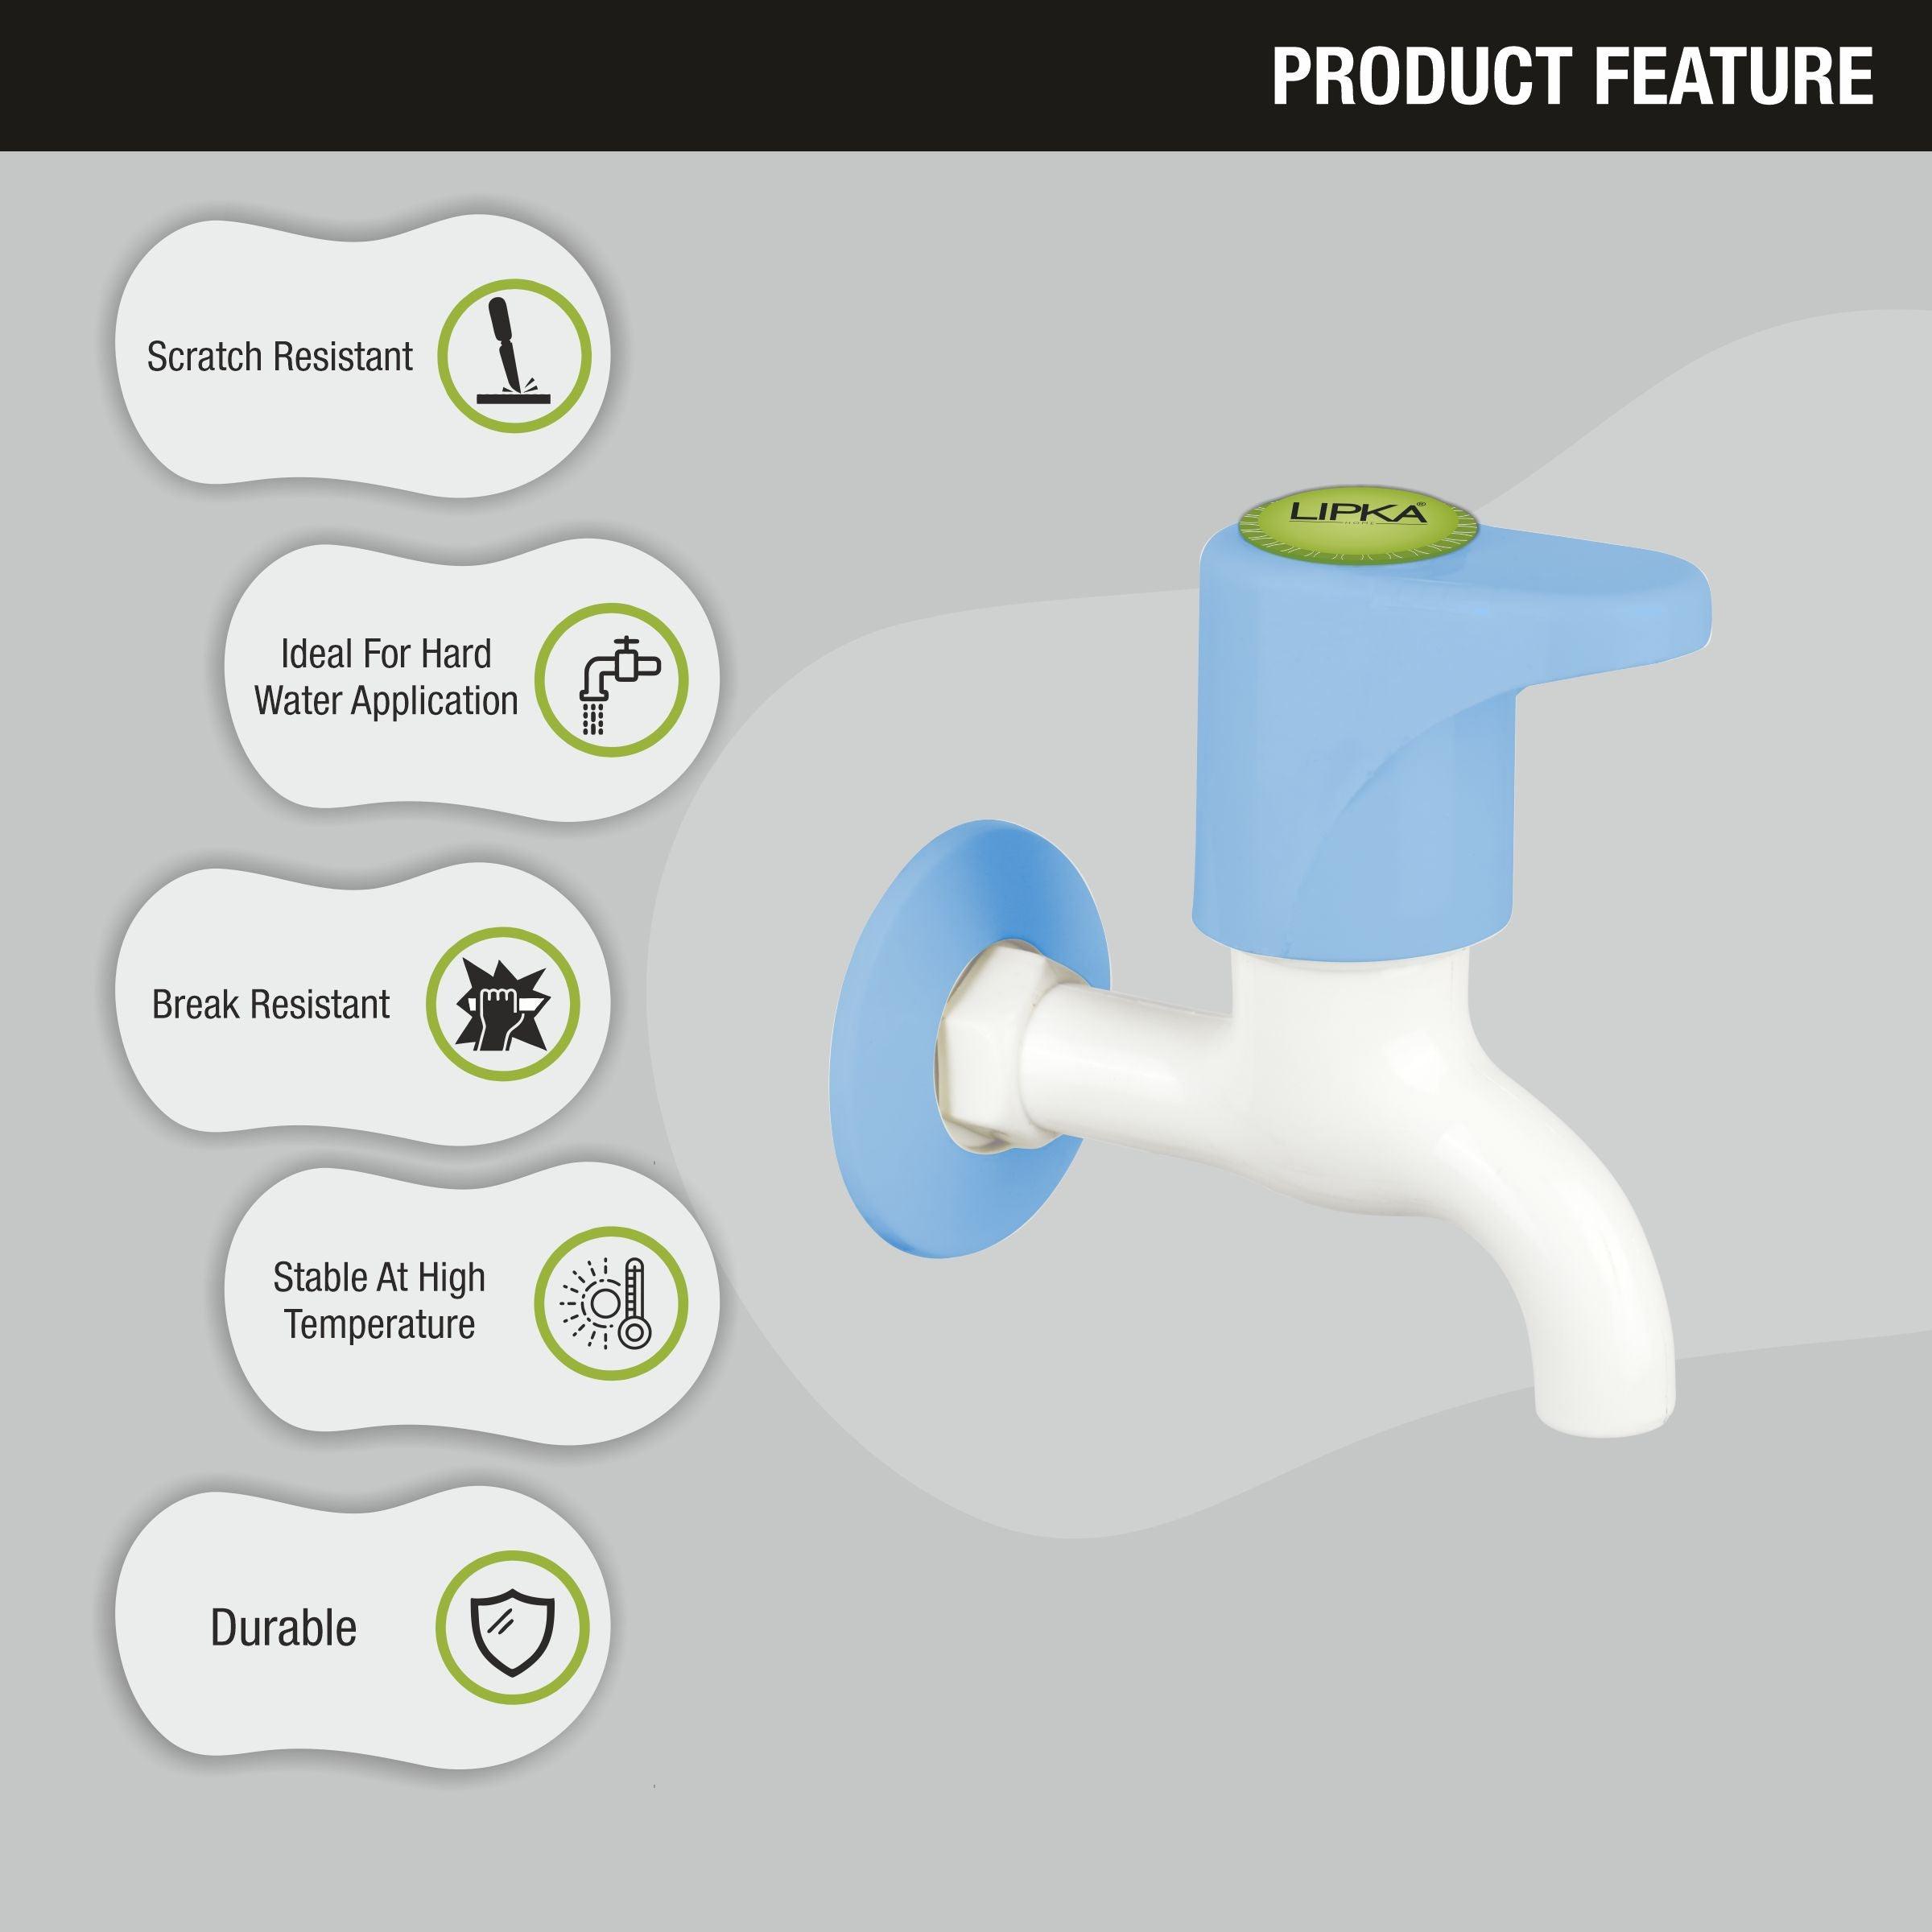 Glory Bib Tap PTMT Faucet features